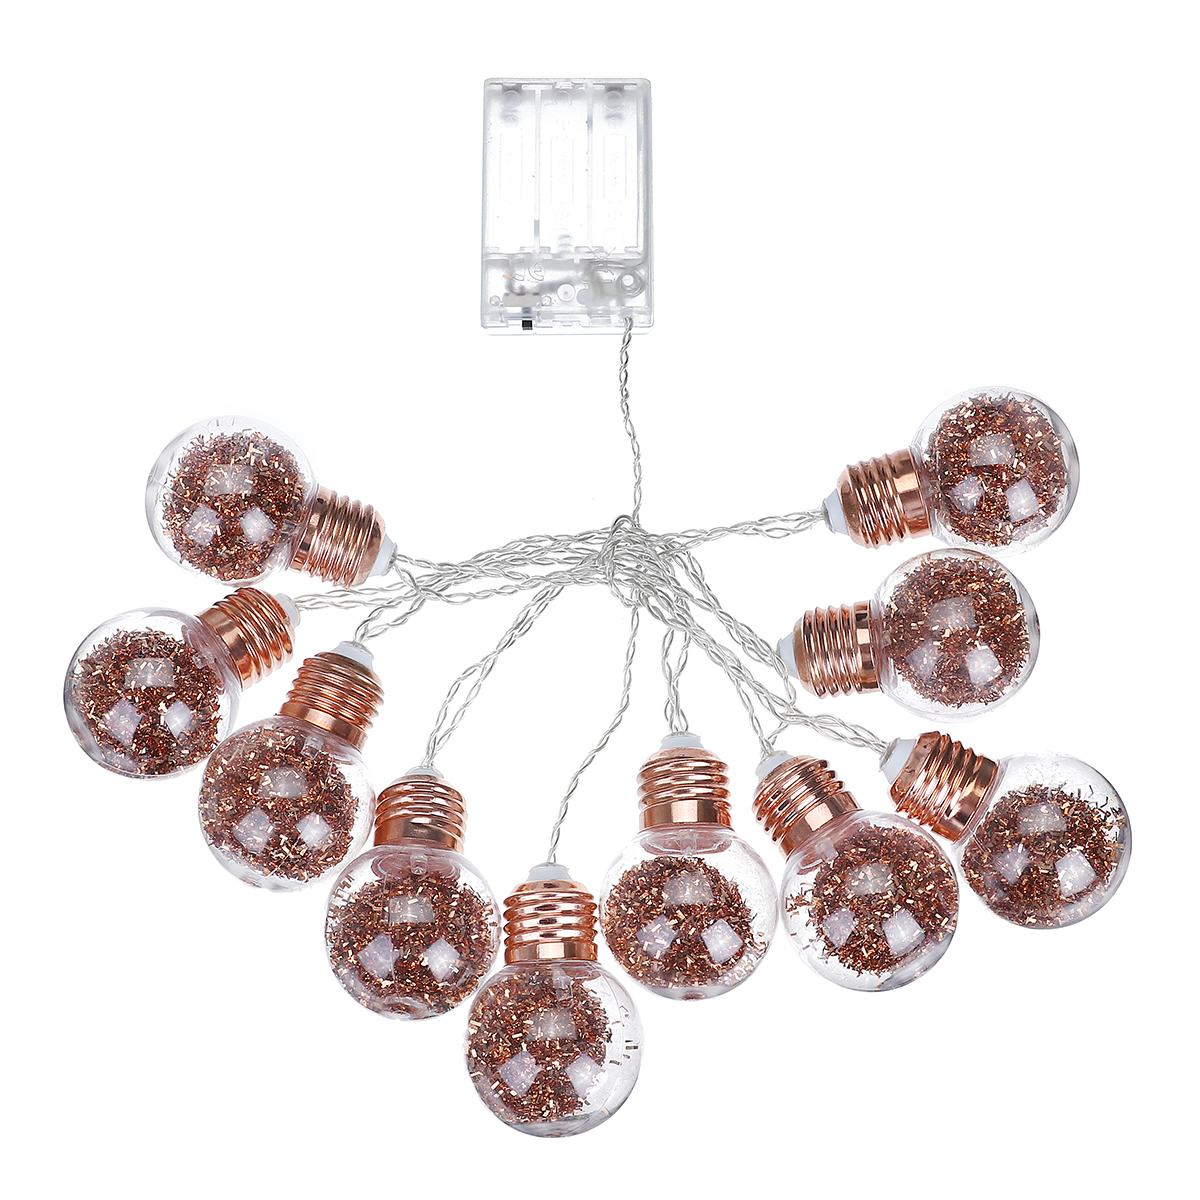 10-LED-Bulbs-String-Lights-Fairy-Lamp-Patio-Party-Yard-Garden-Wedding-Home-Decorative-Night-Light-1538526-6